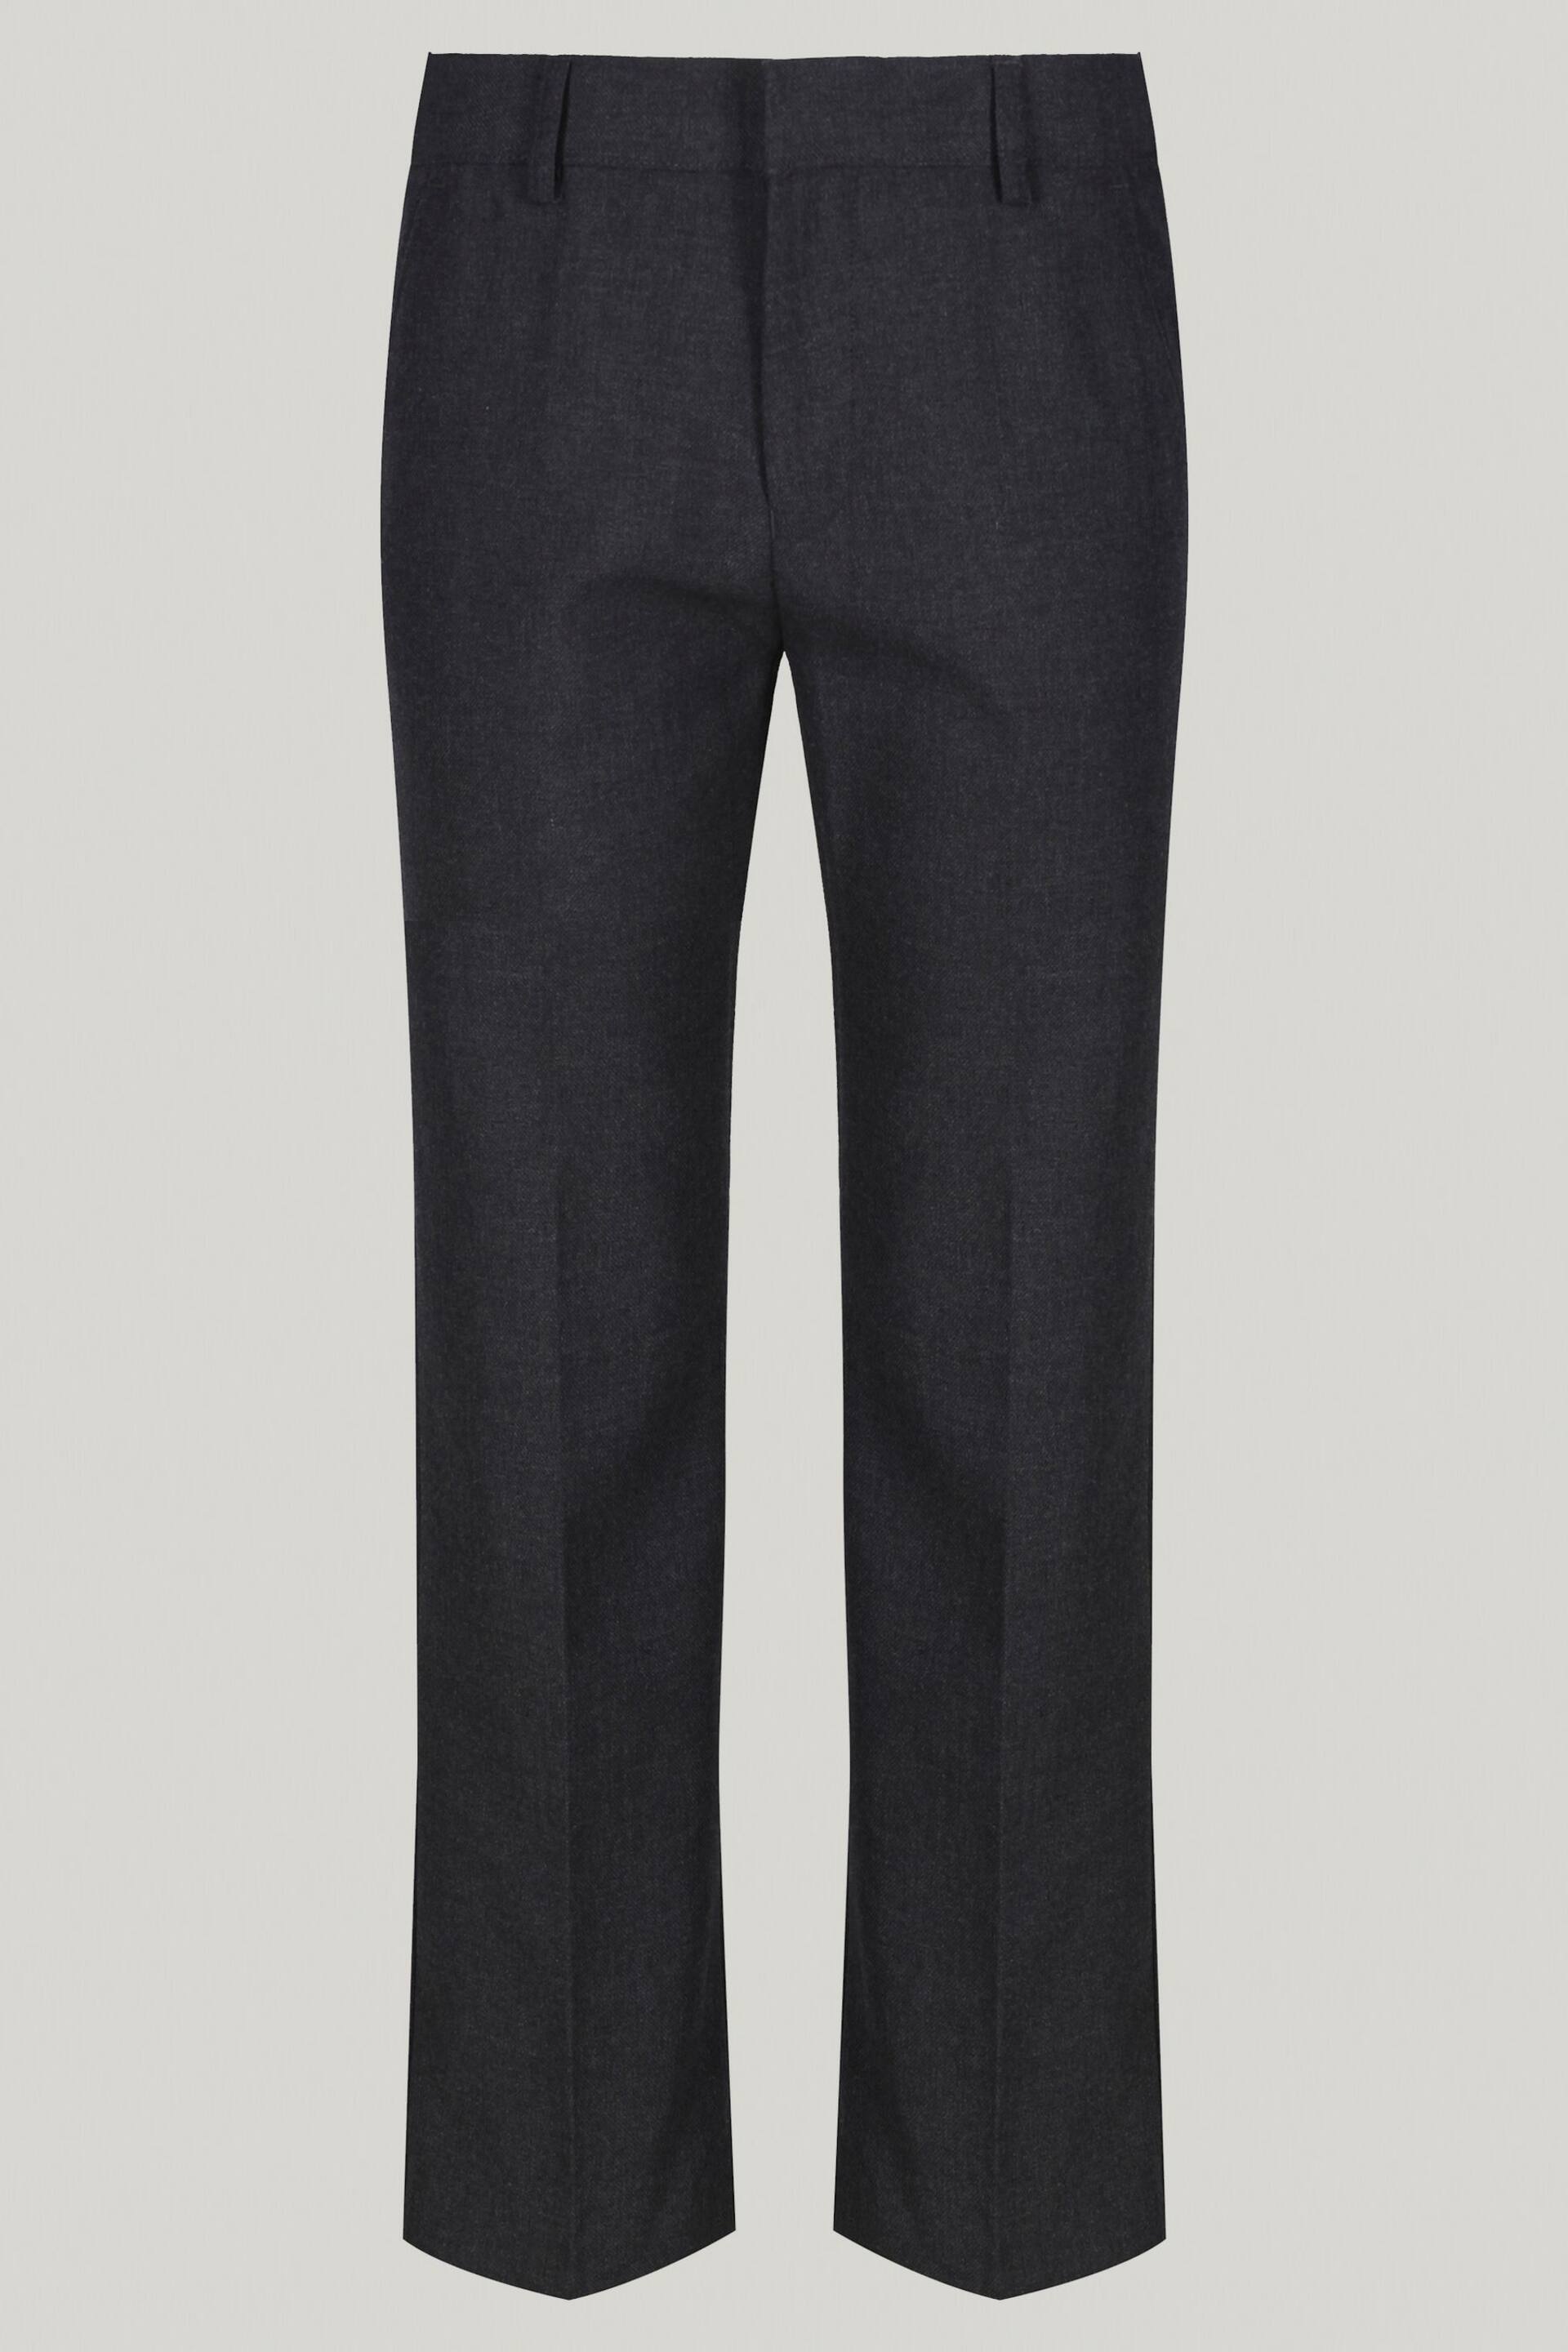 Trutex Junior Boys Regular Fit Grey School Trousers - Image 4 of 5